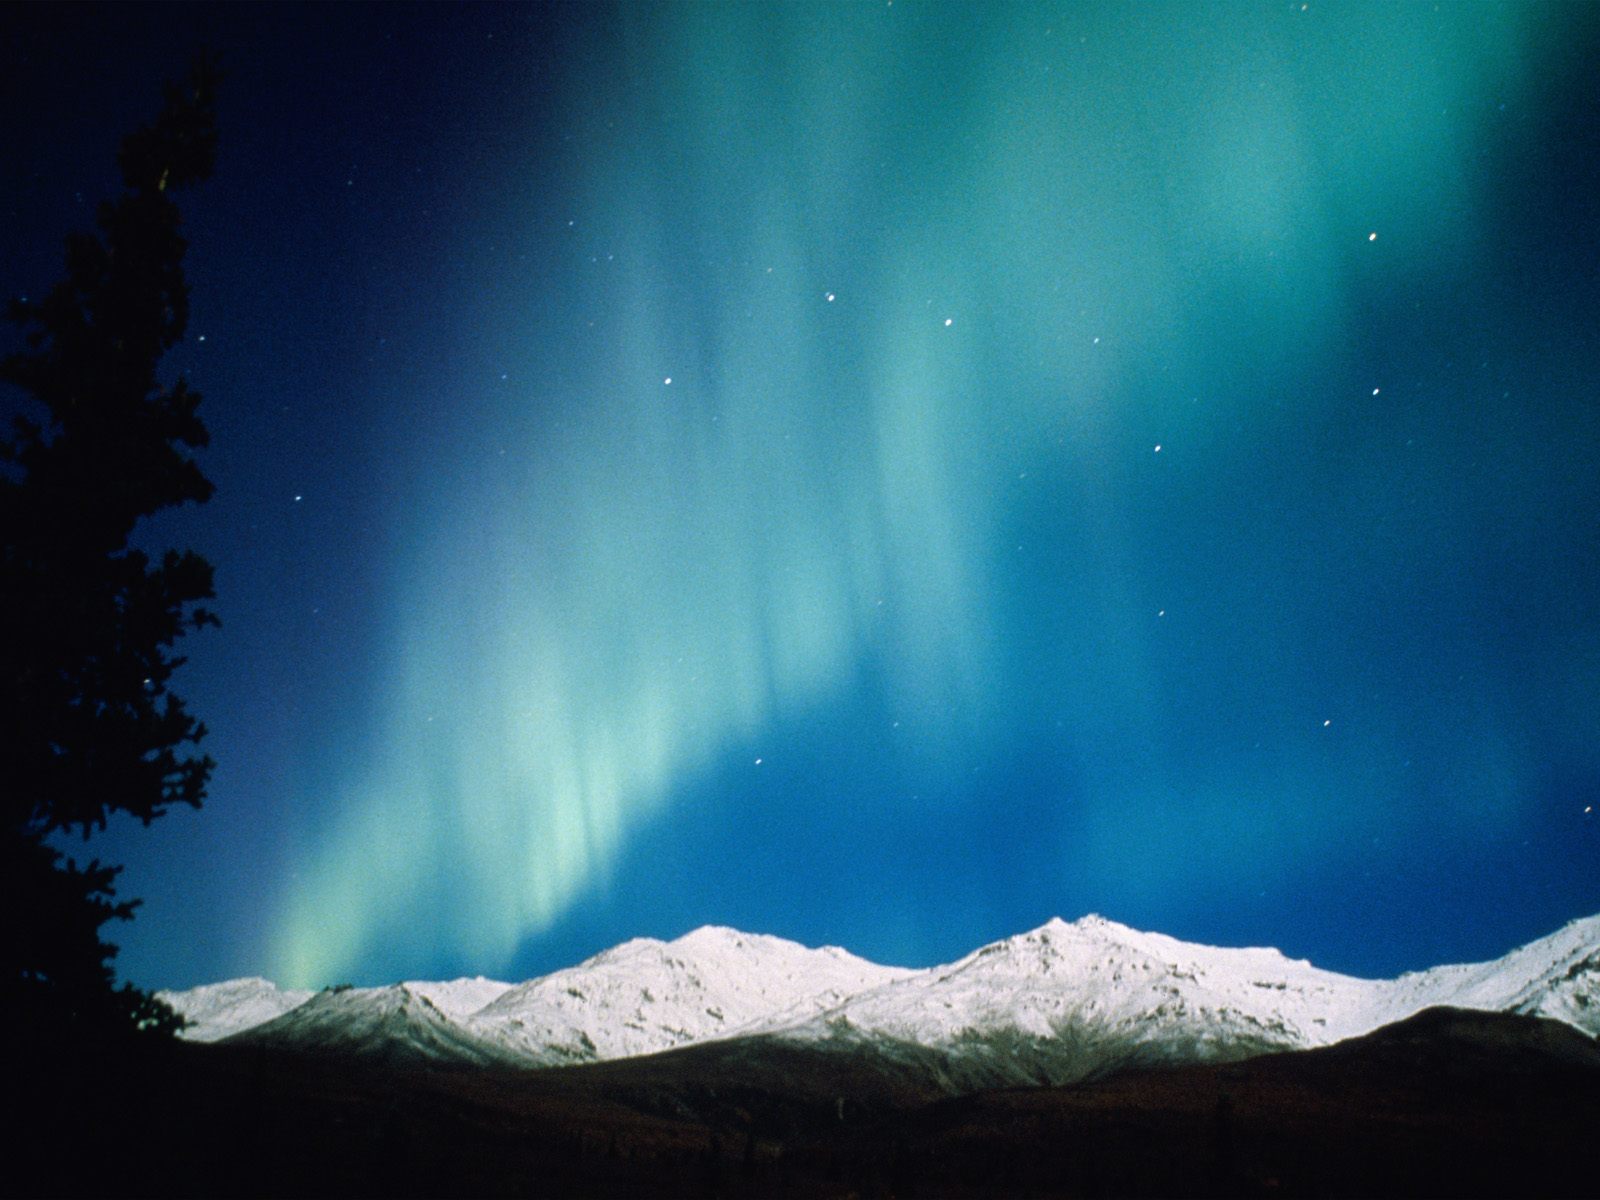 Night Lights, Aurora Borealis, Alaska   